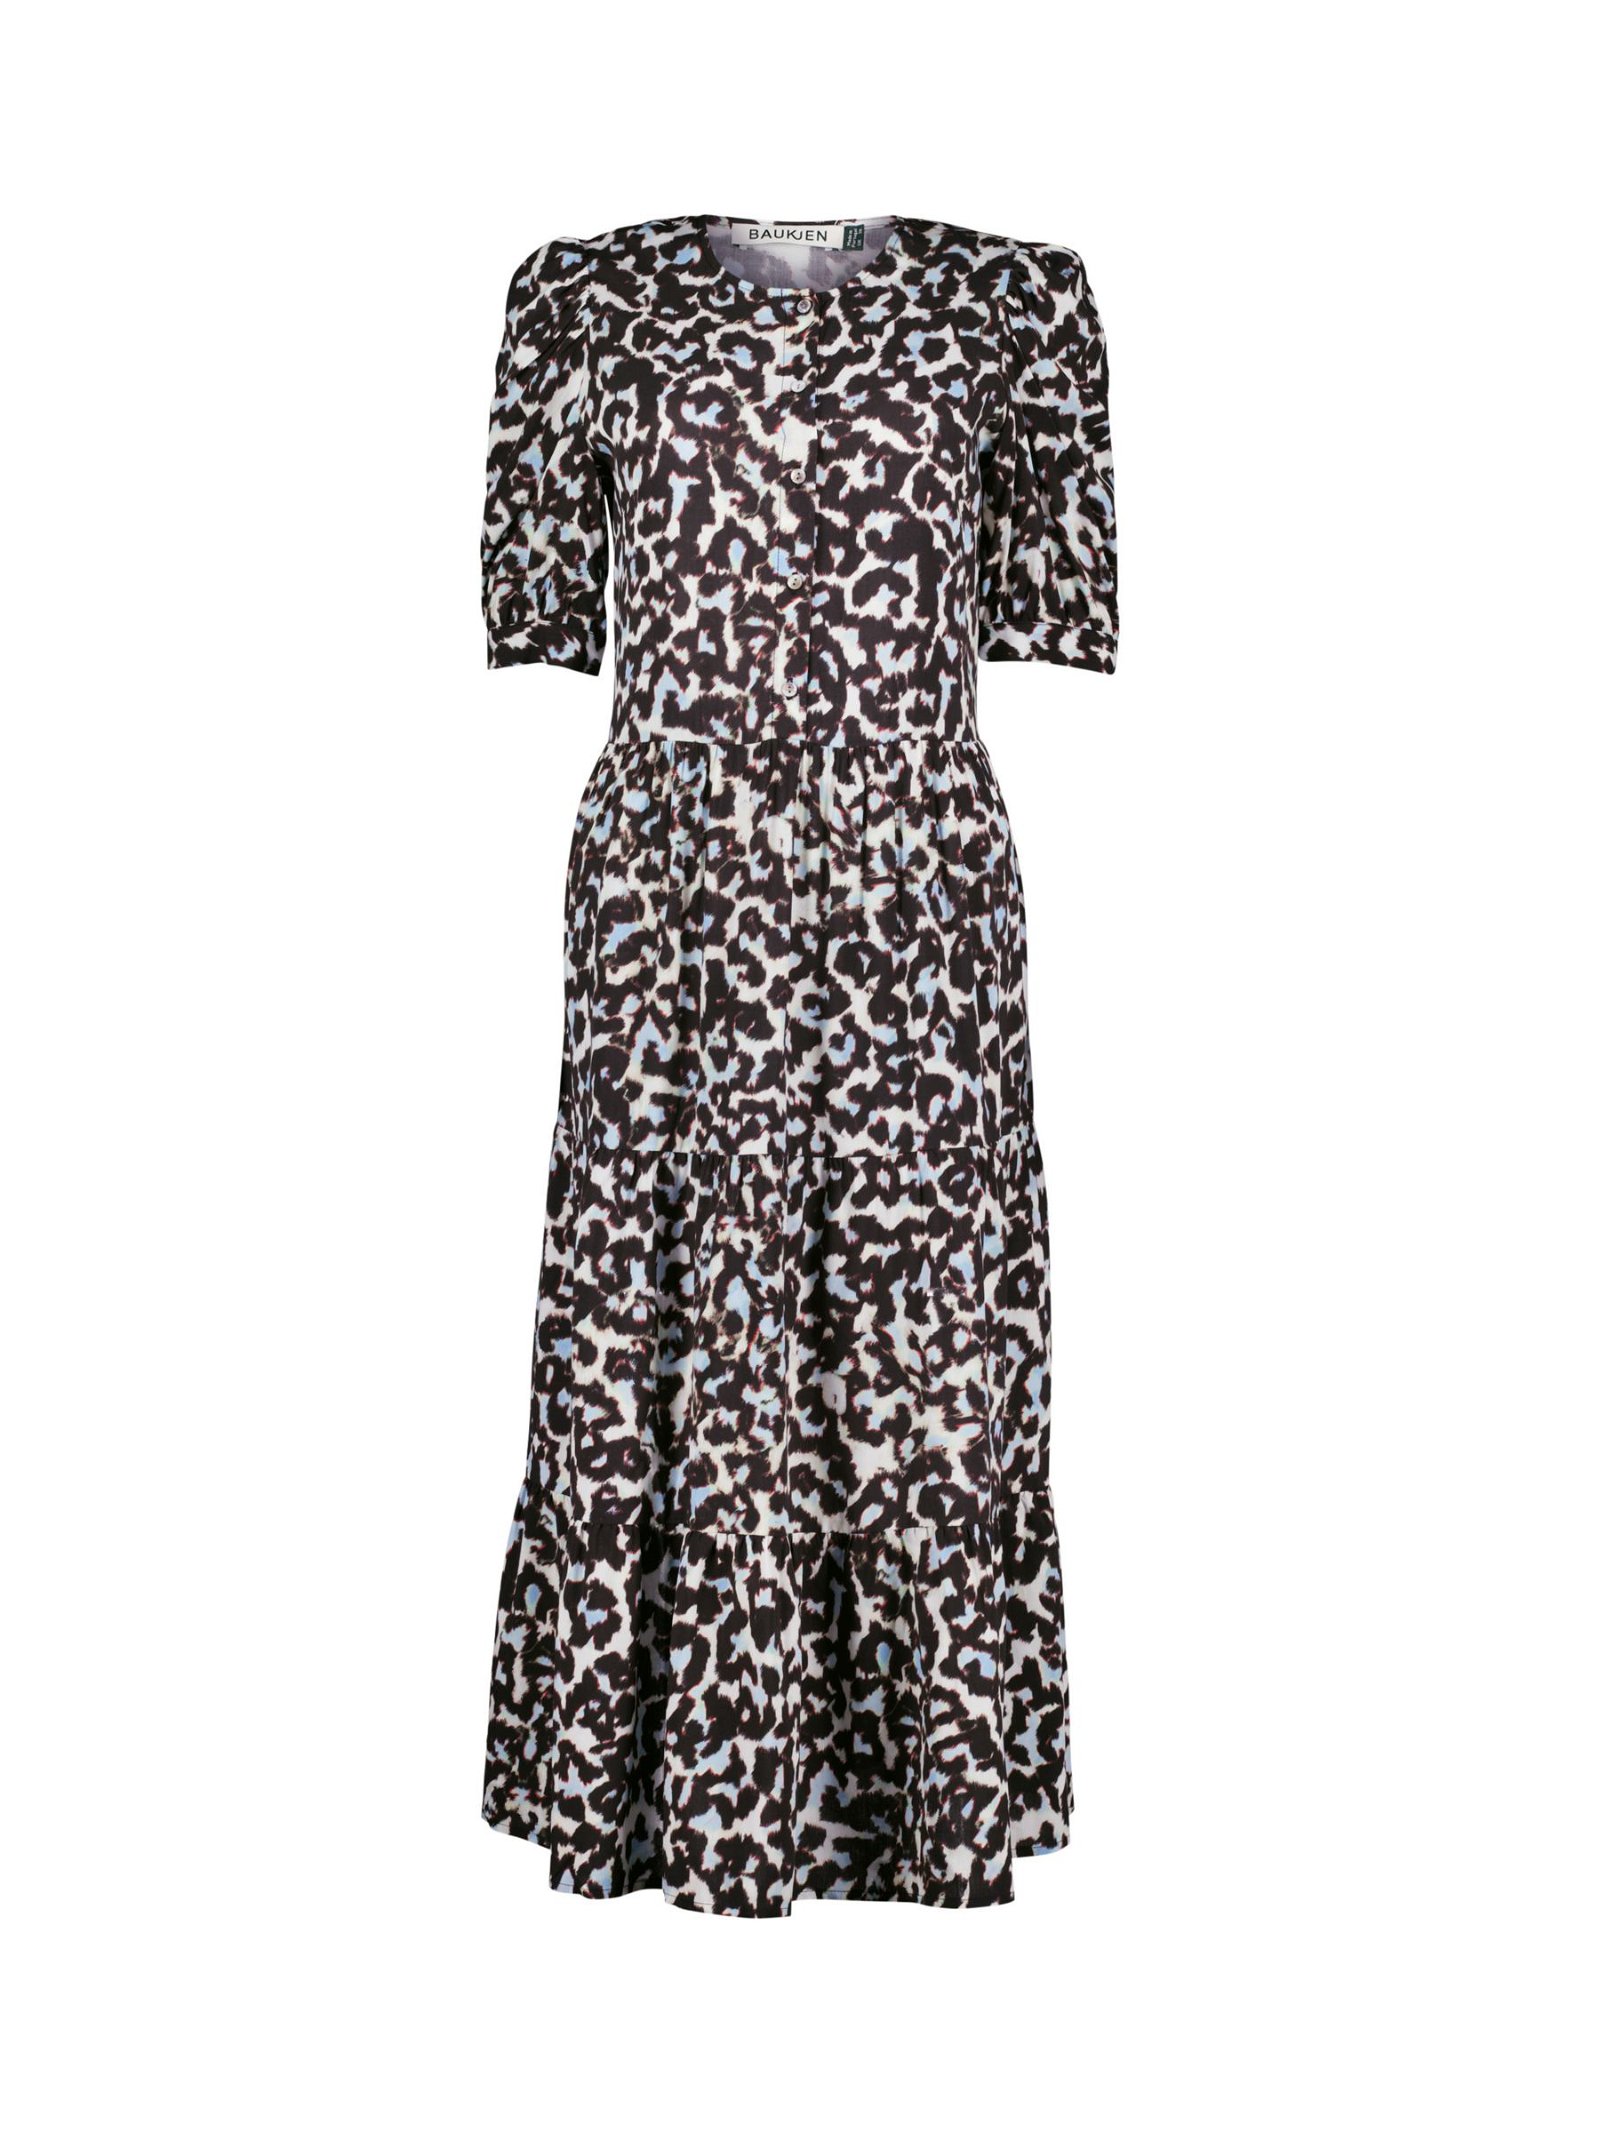 BAUKJEN Olivia Leopard Print Midi Dress in Soft White Snow/Multi | Endource